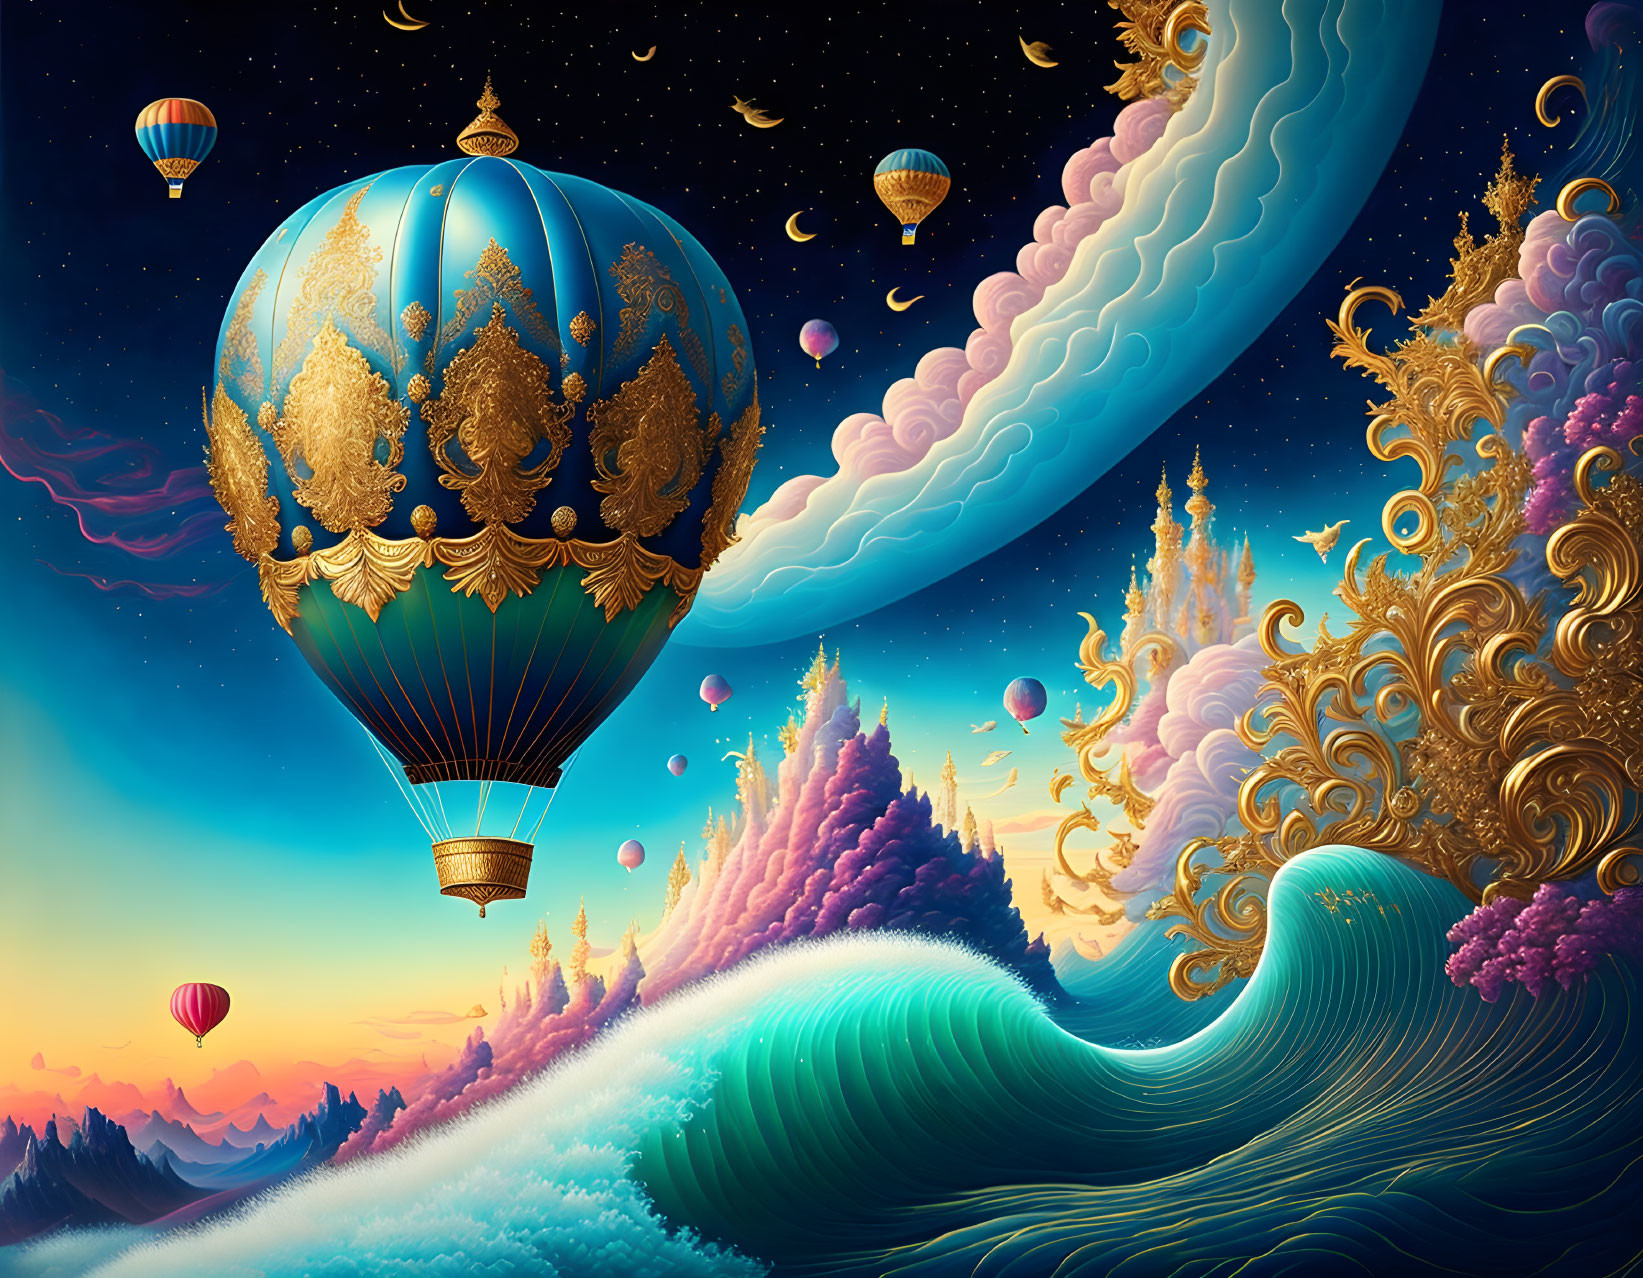 Fantastical hot air balloons over whimsical landscapes